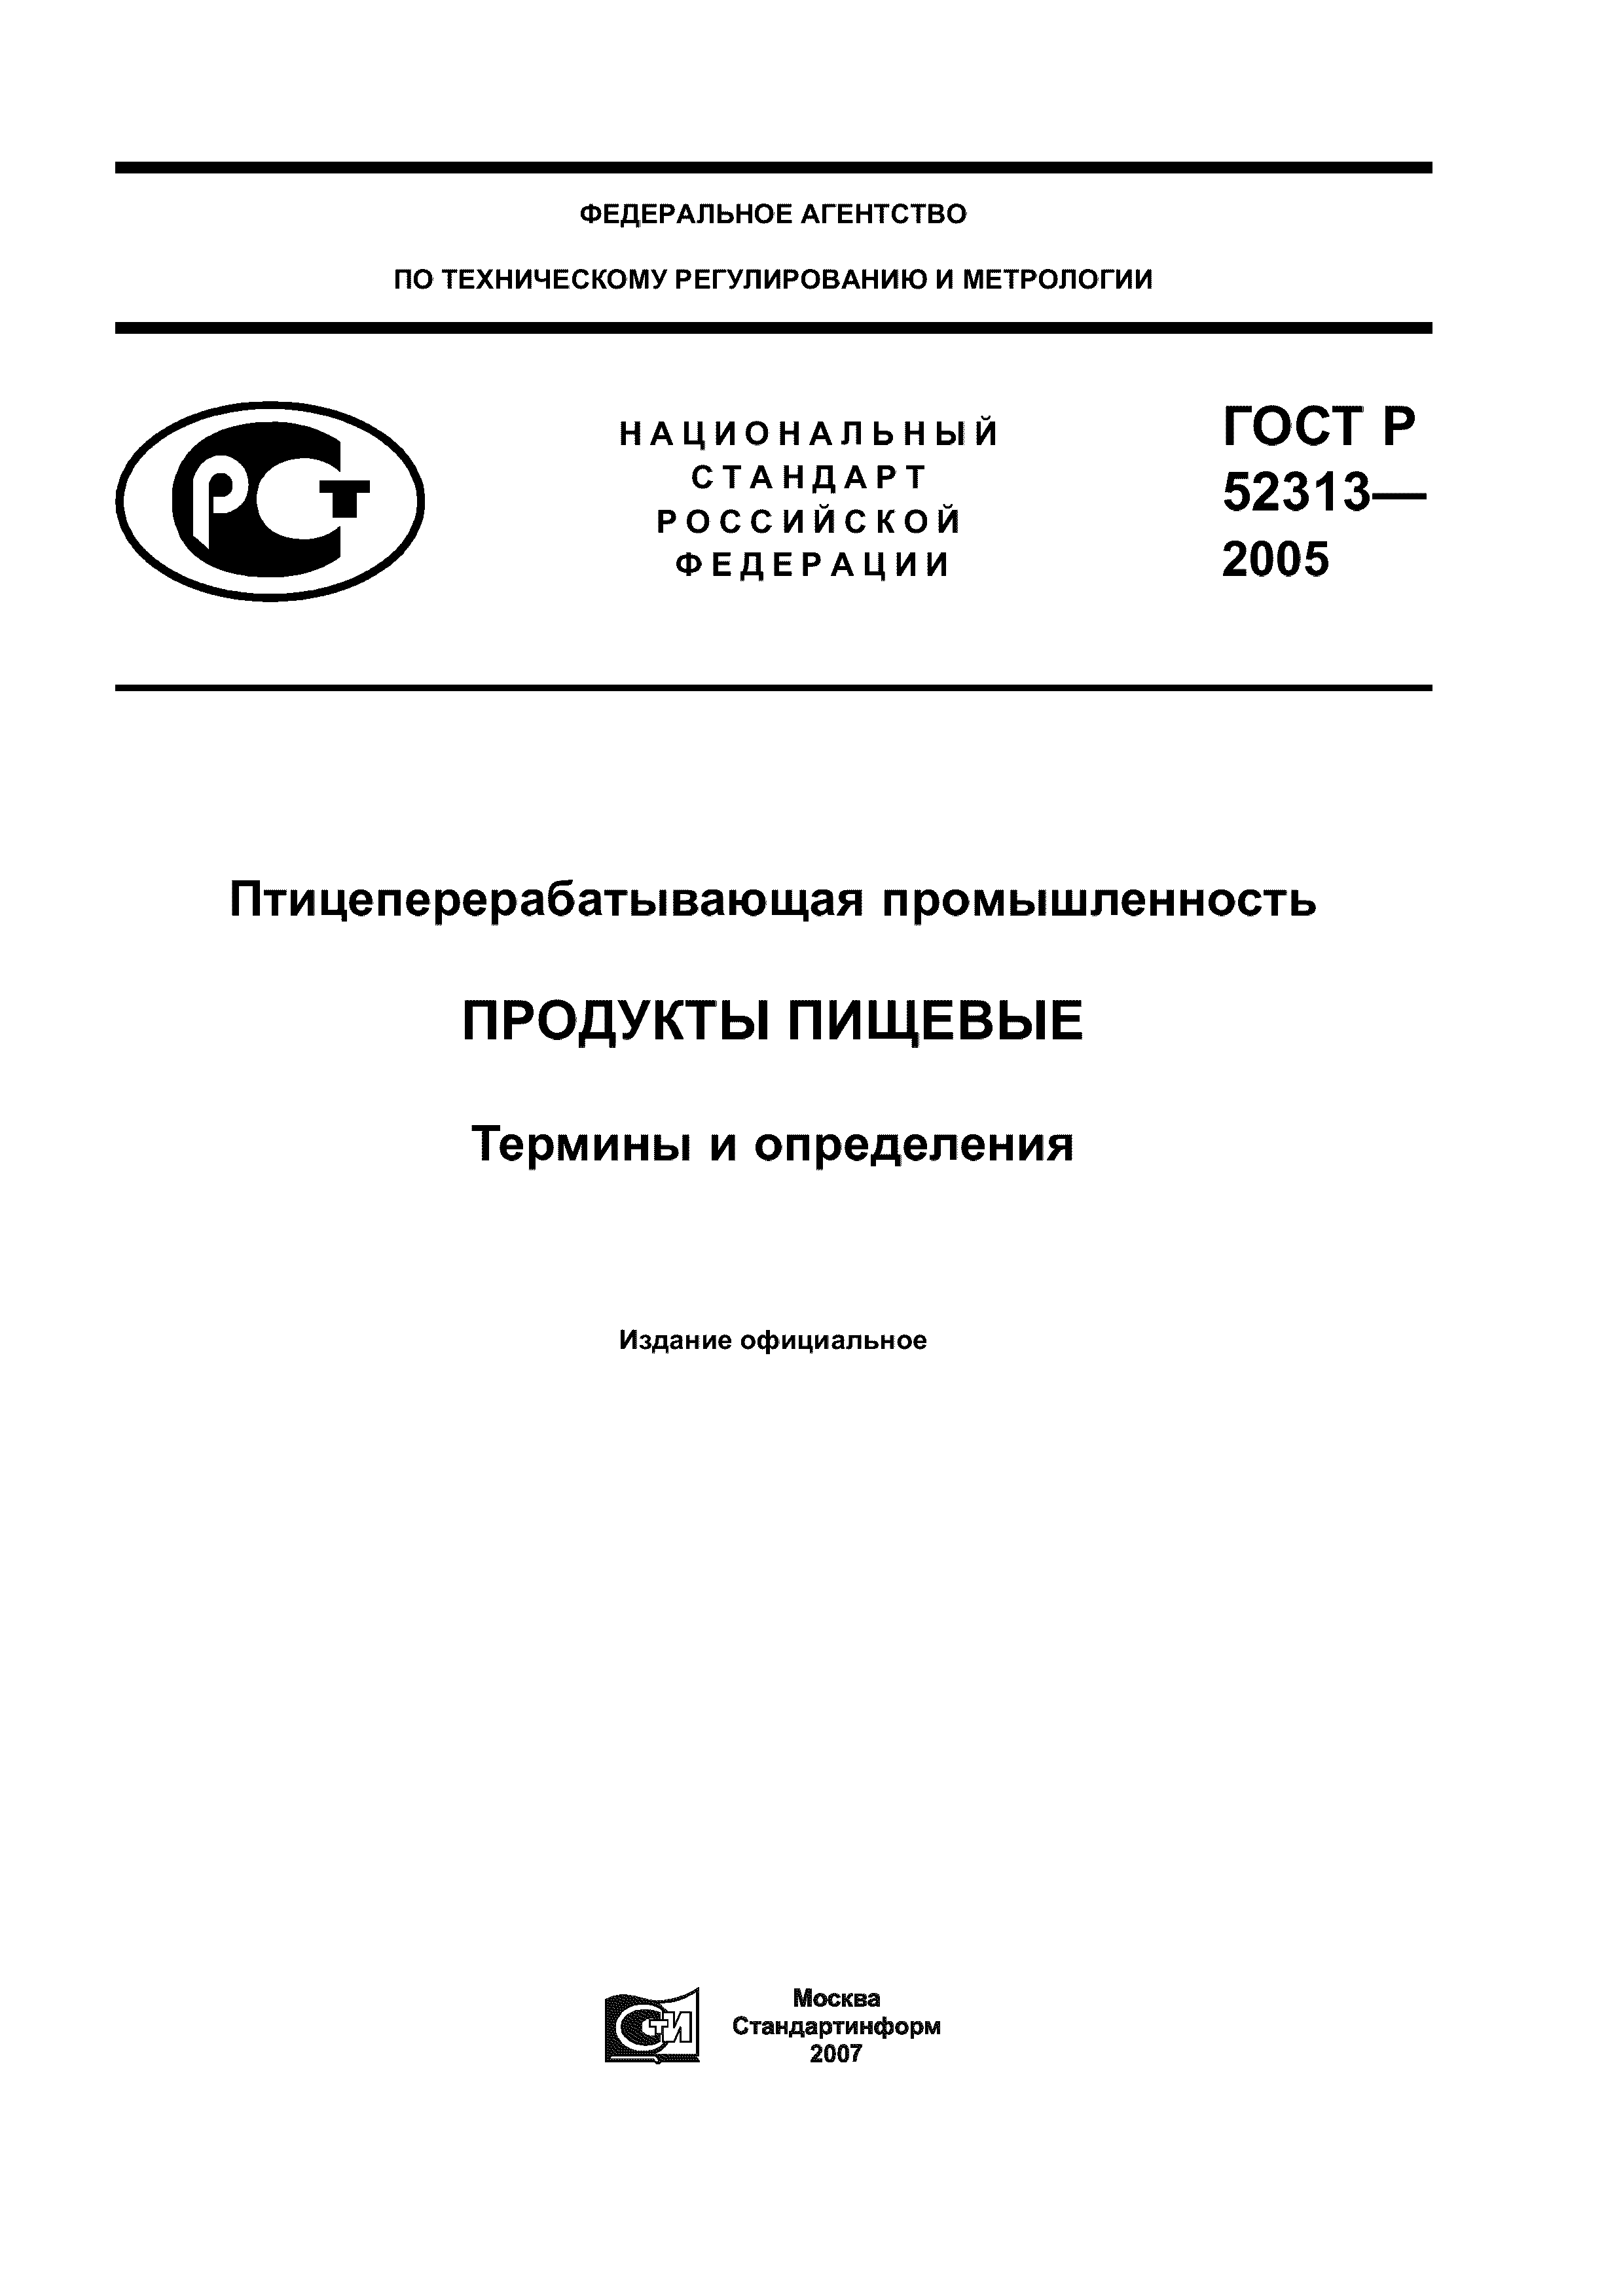 ГОСТ Р 52313-2005